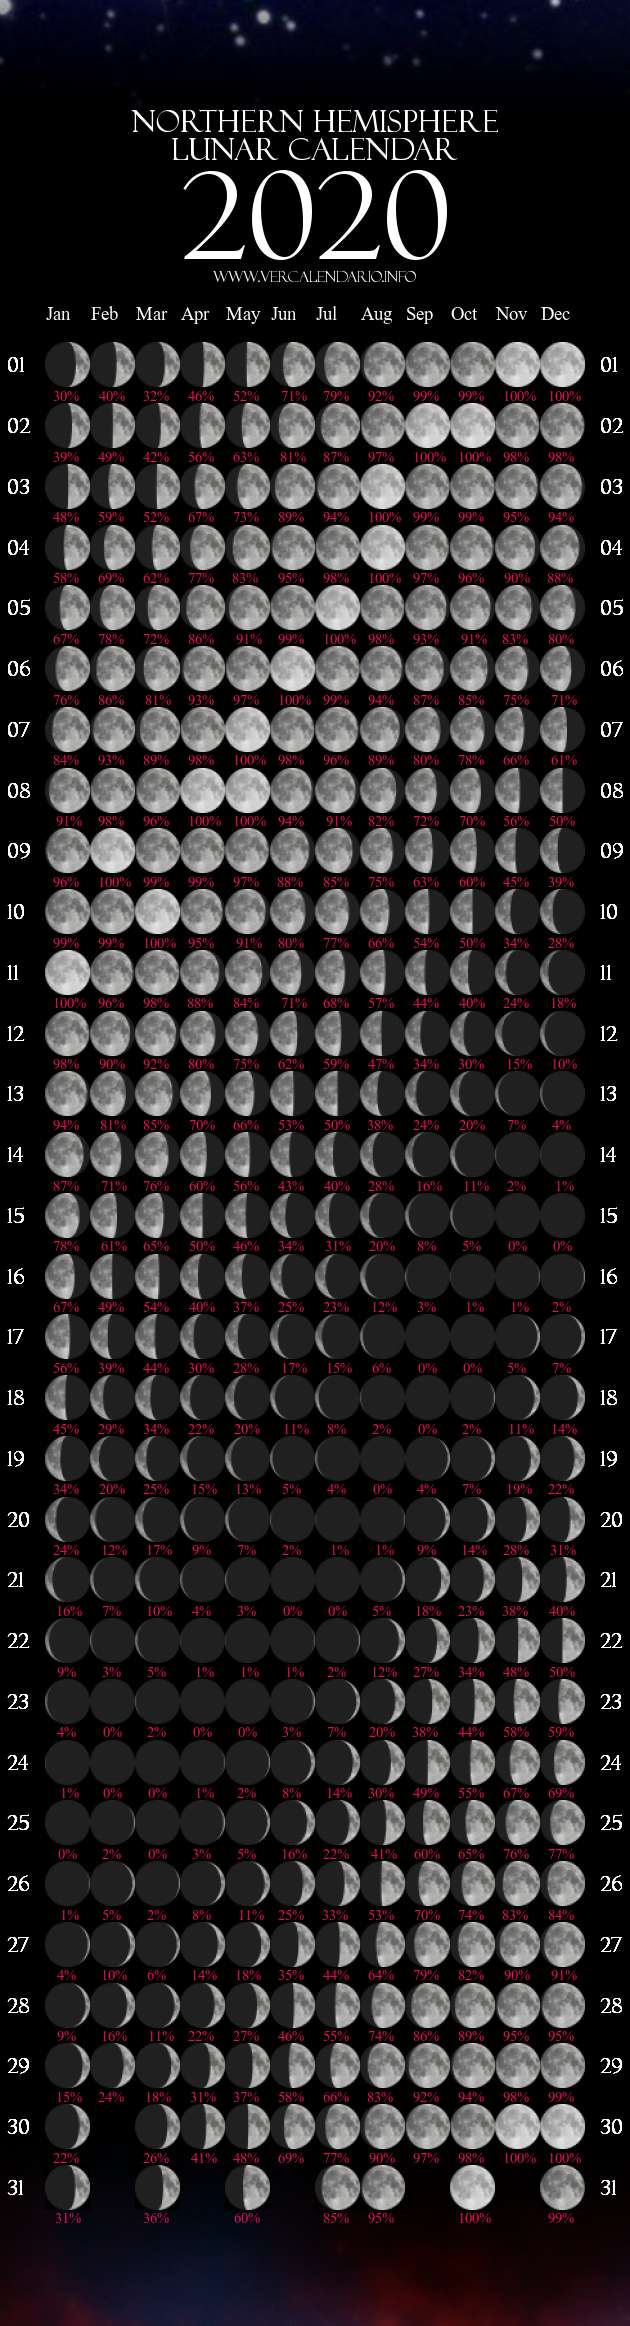 View Printable Moon Phase Calendar November 2020 Images